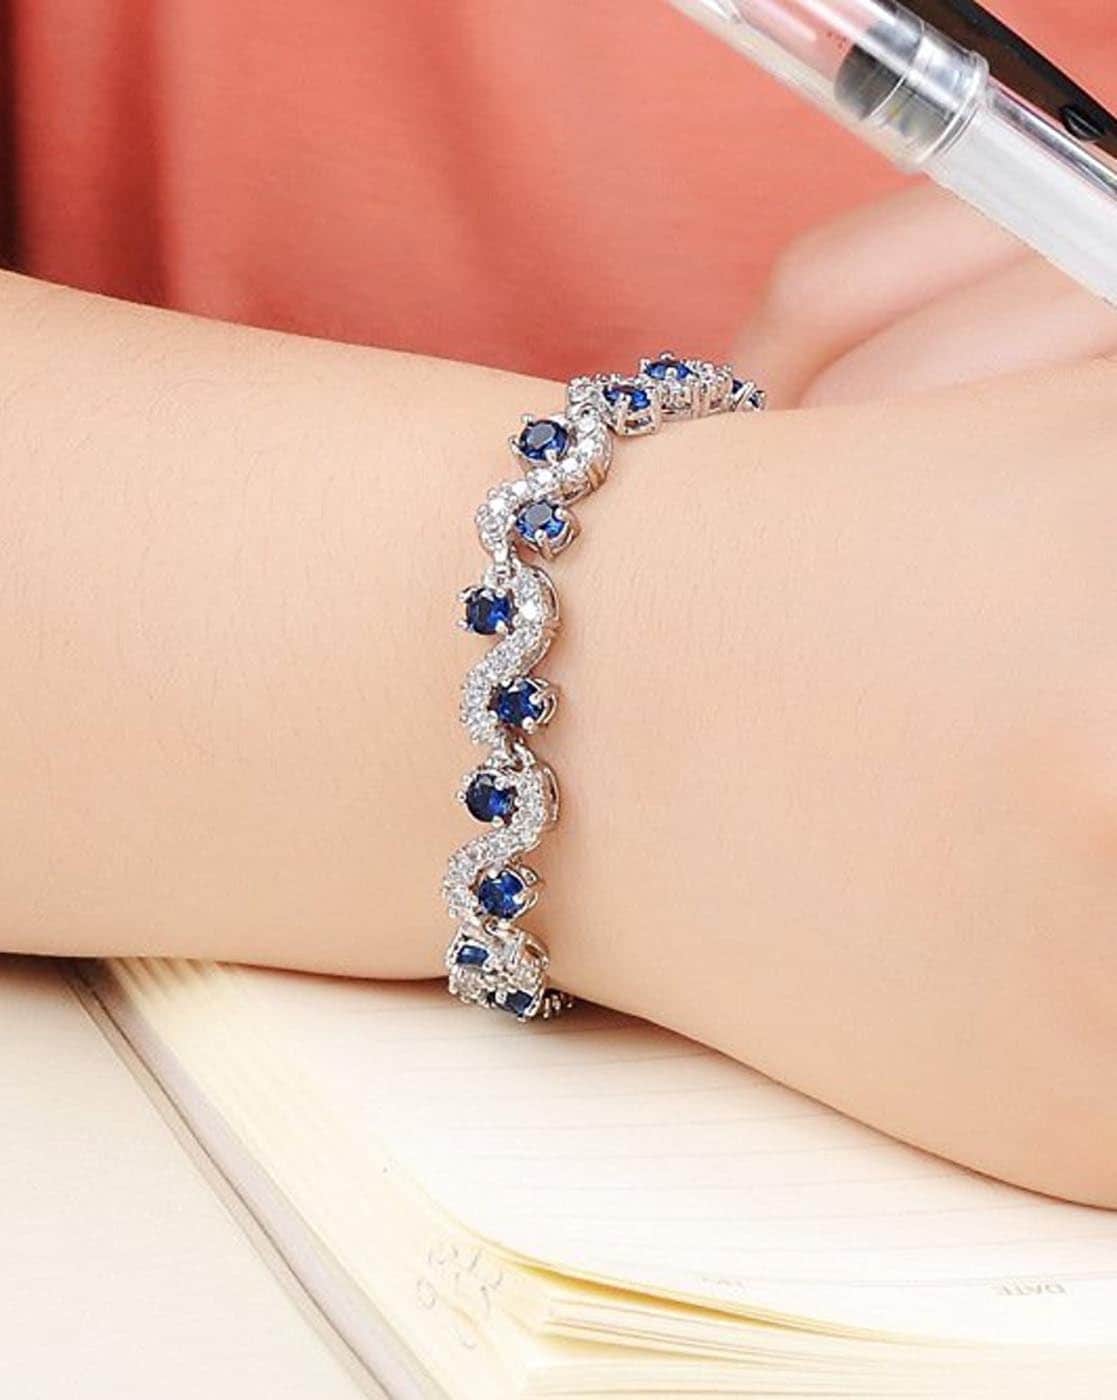 Buy quality 925 Sterling Silver Bracelet Design in Ahmedabad